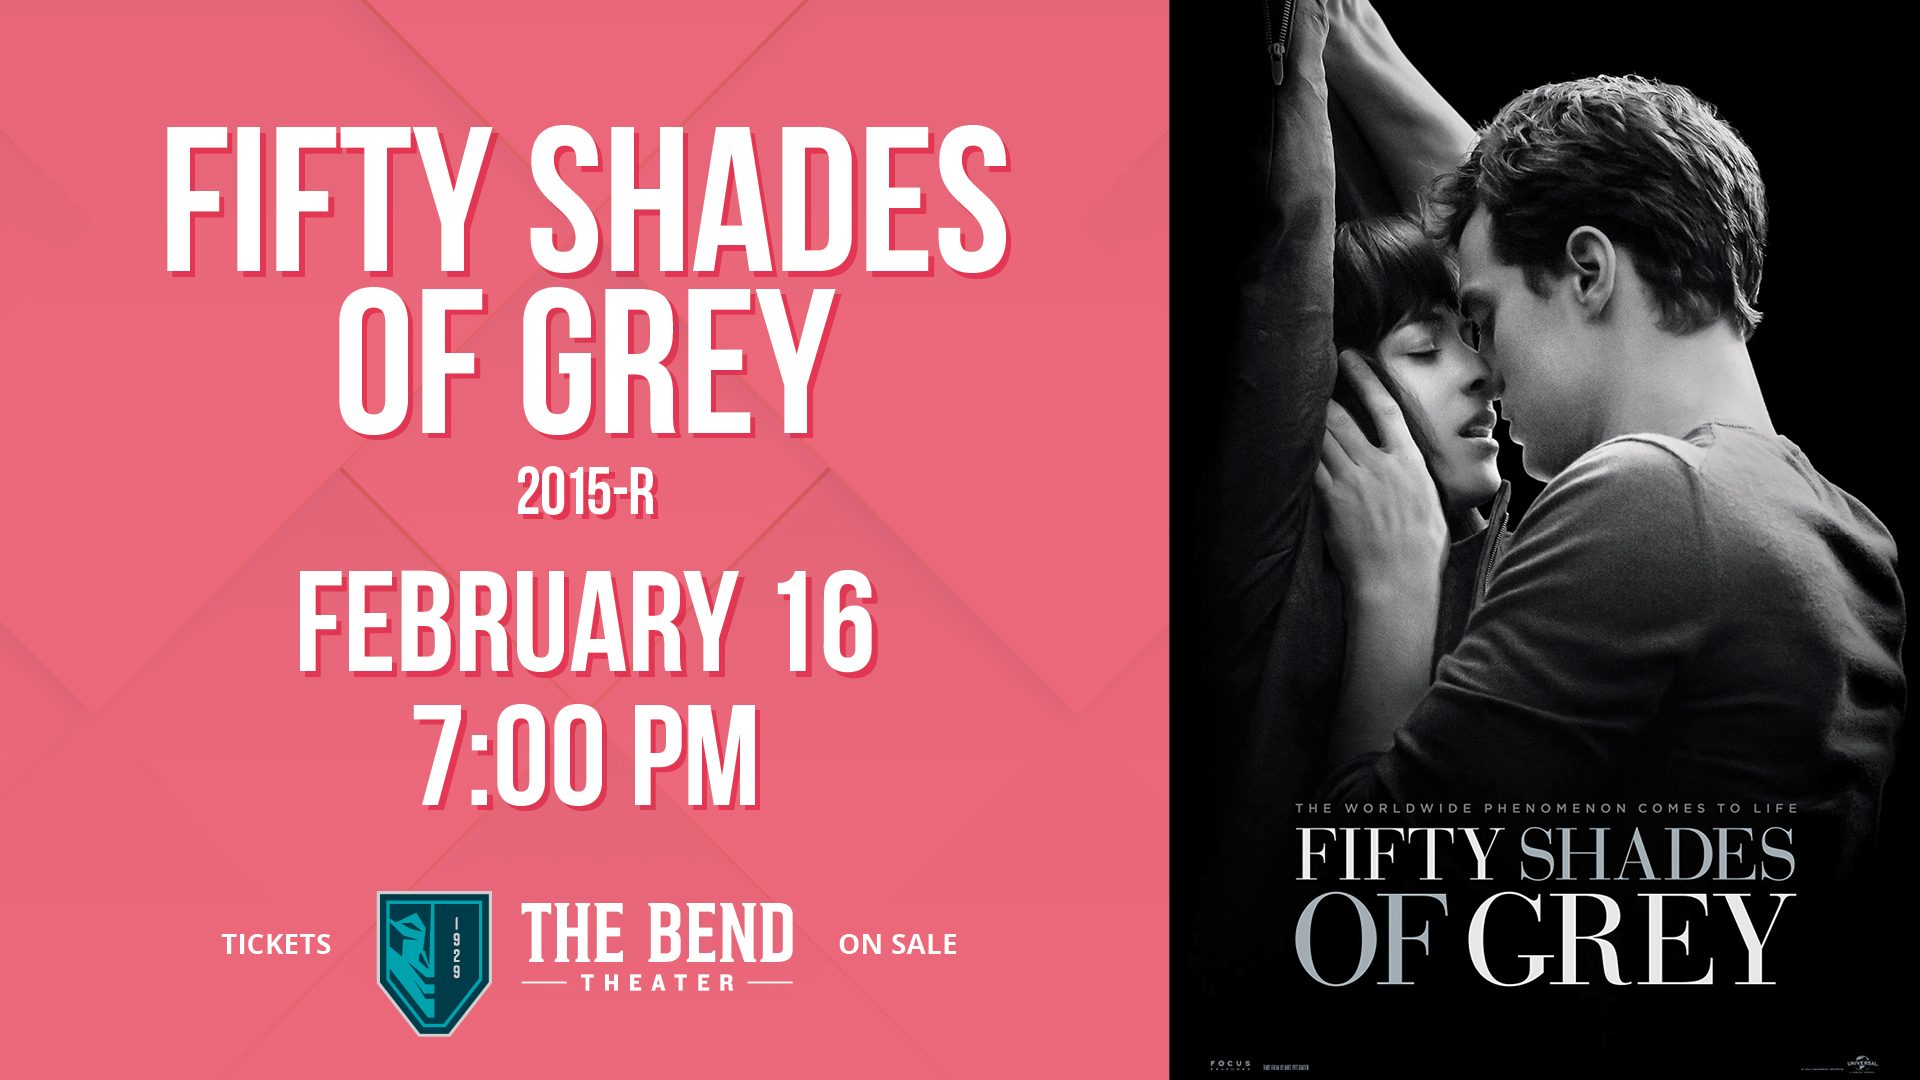 Fifty Shades of Grey (2015 - R)